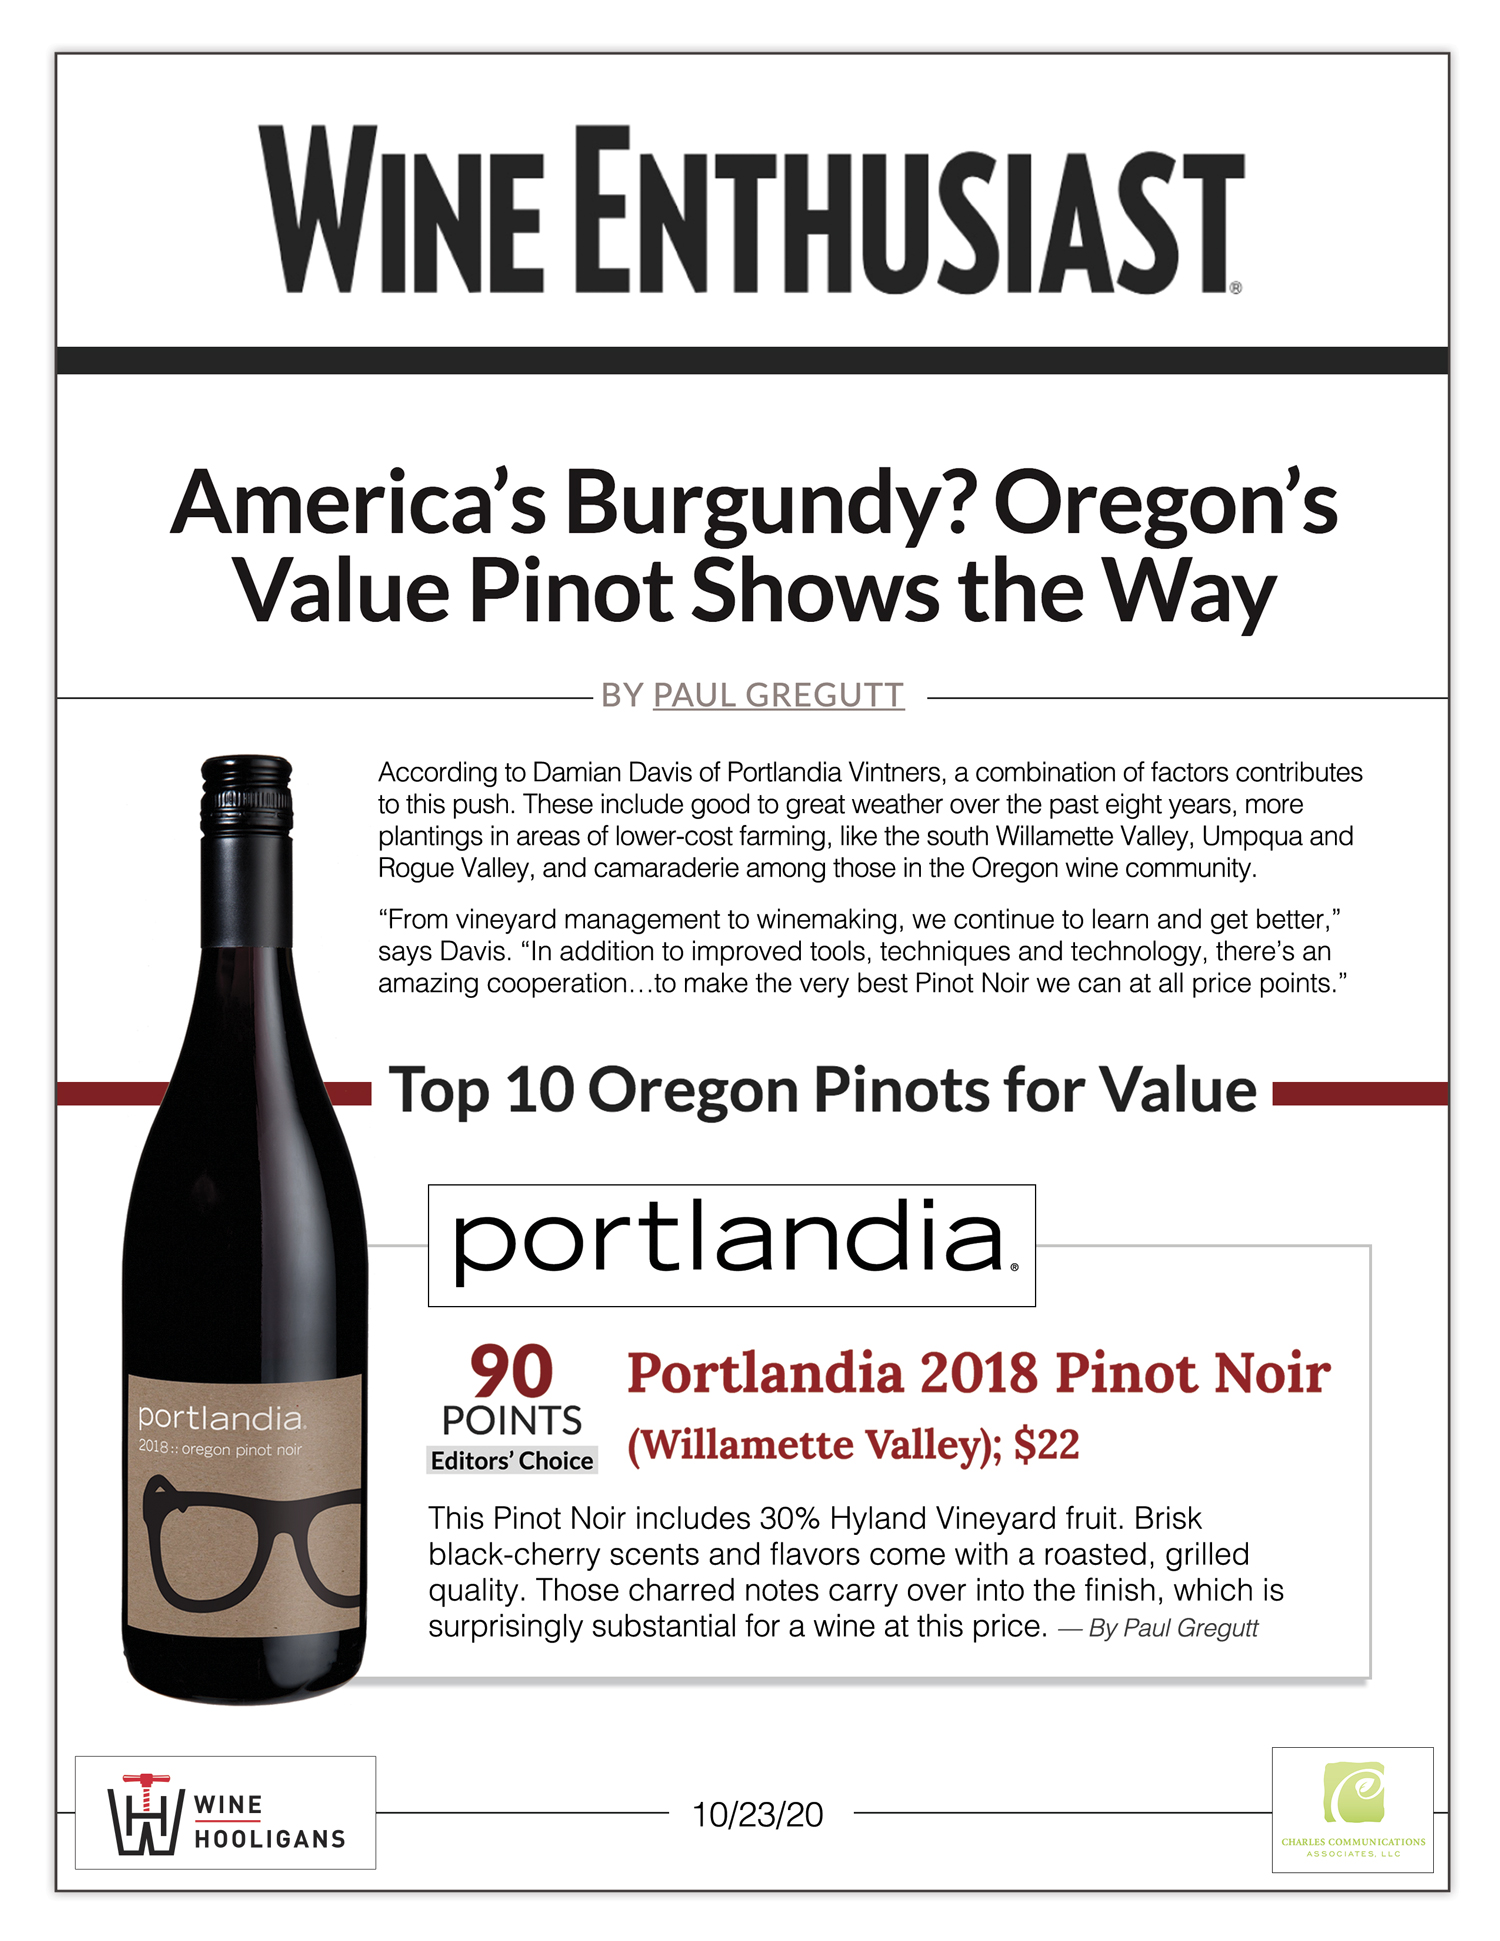 Wine Enthusiast - Portlandia